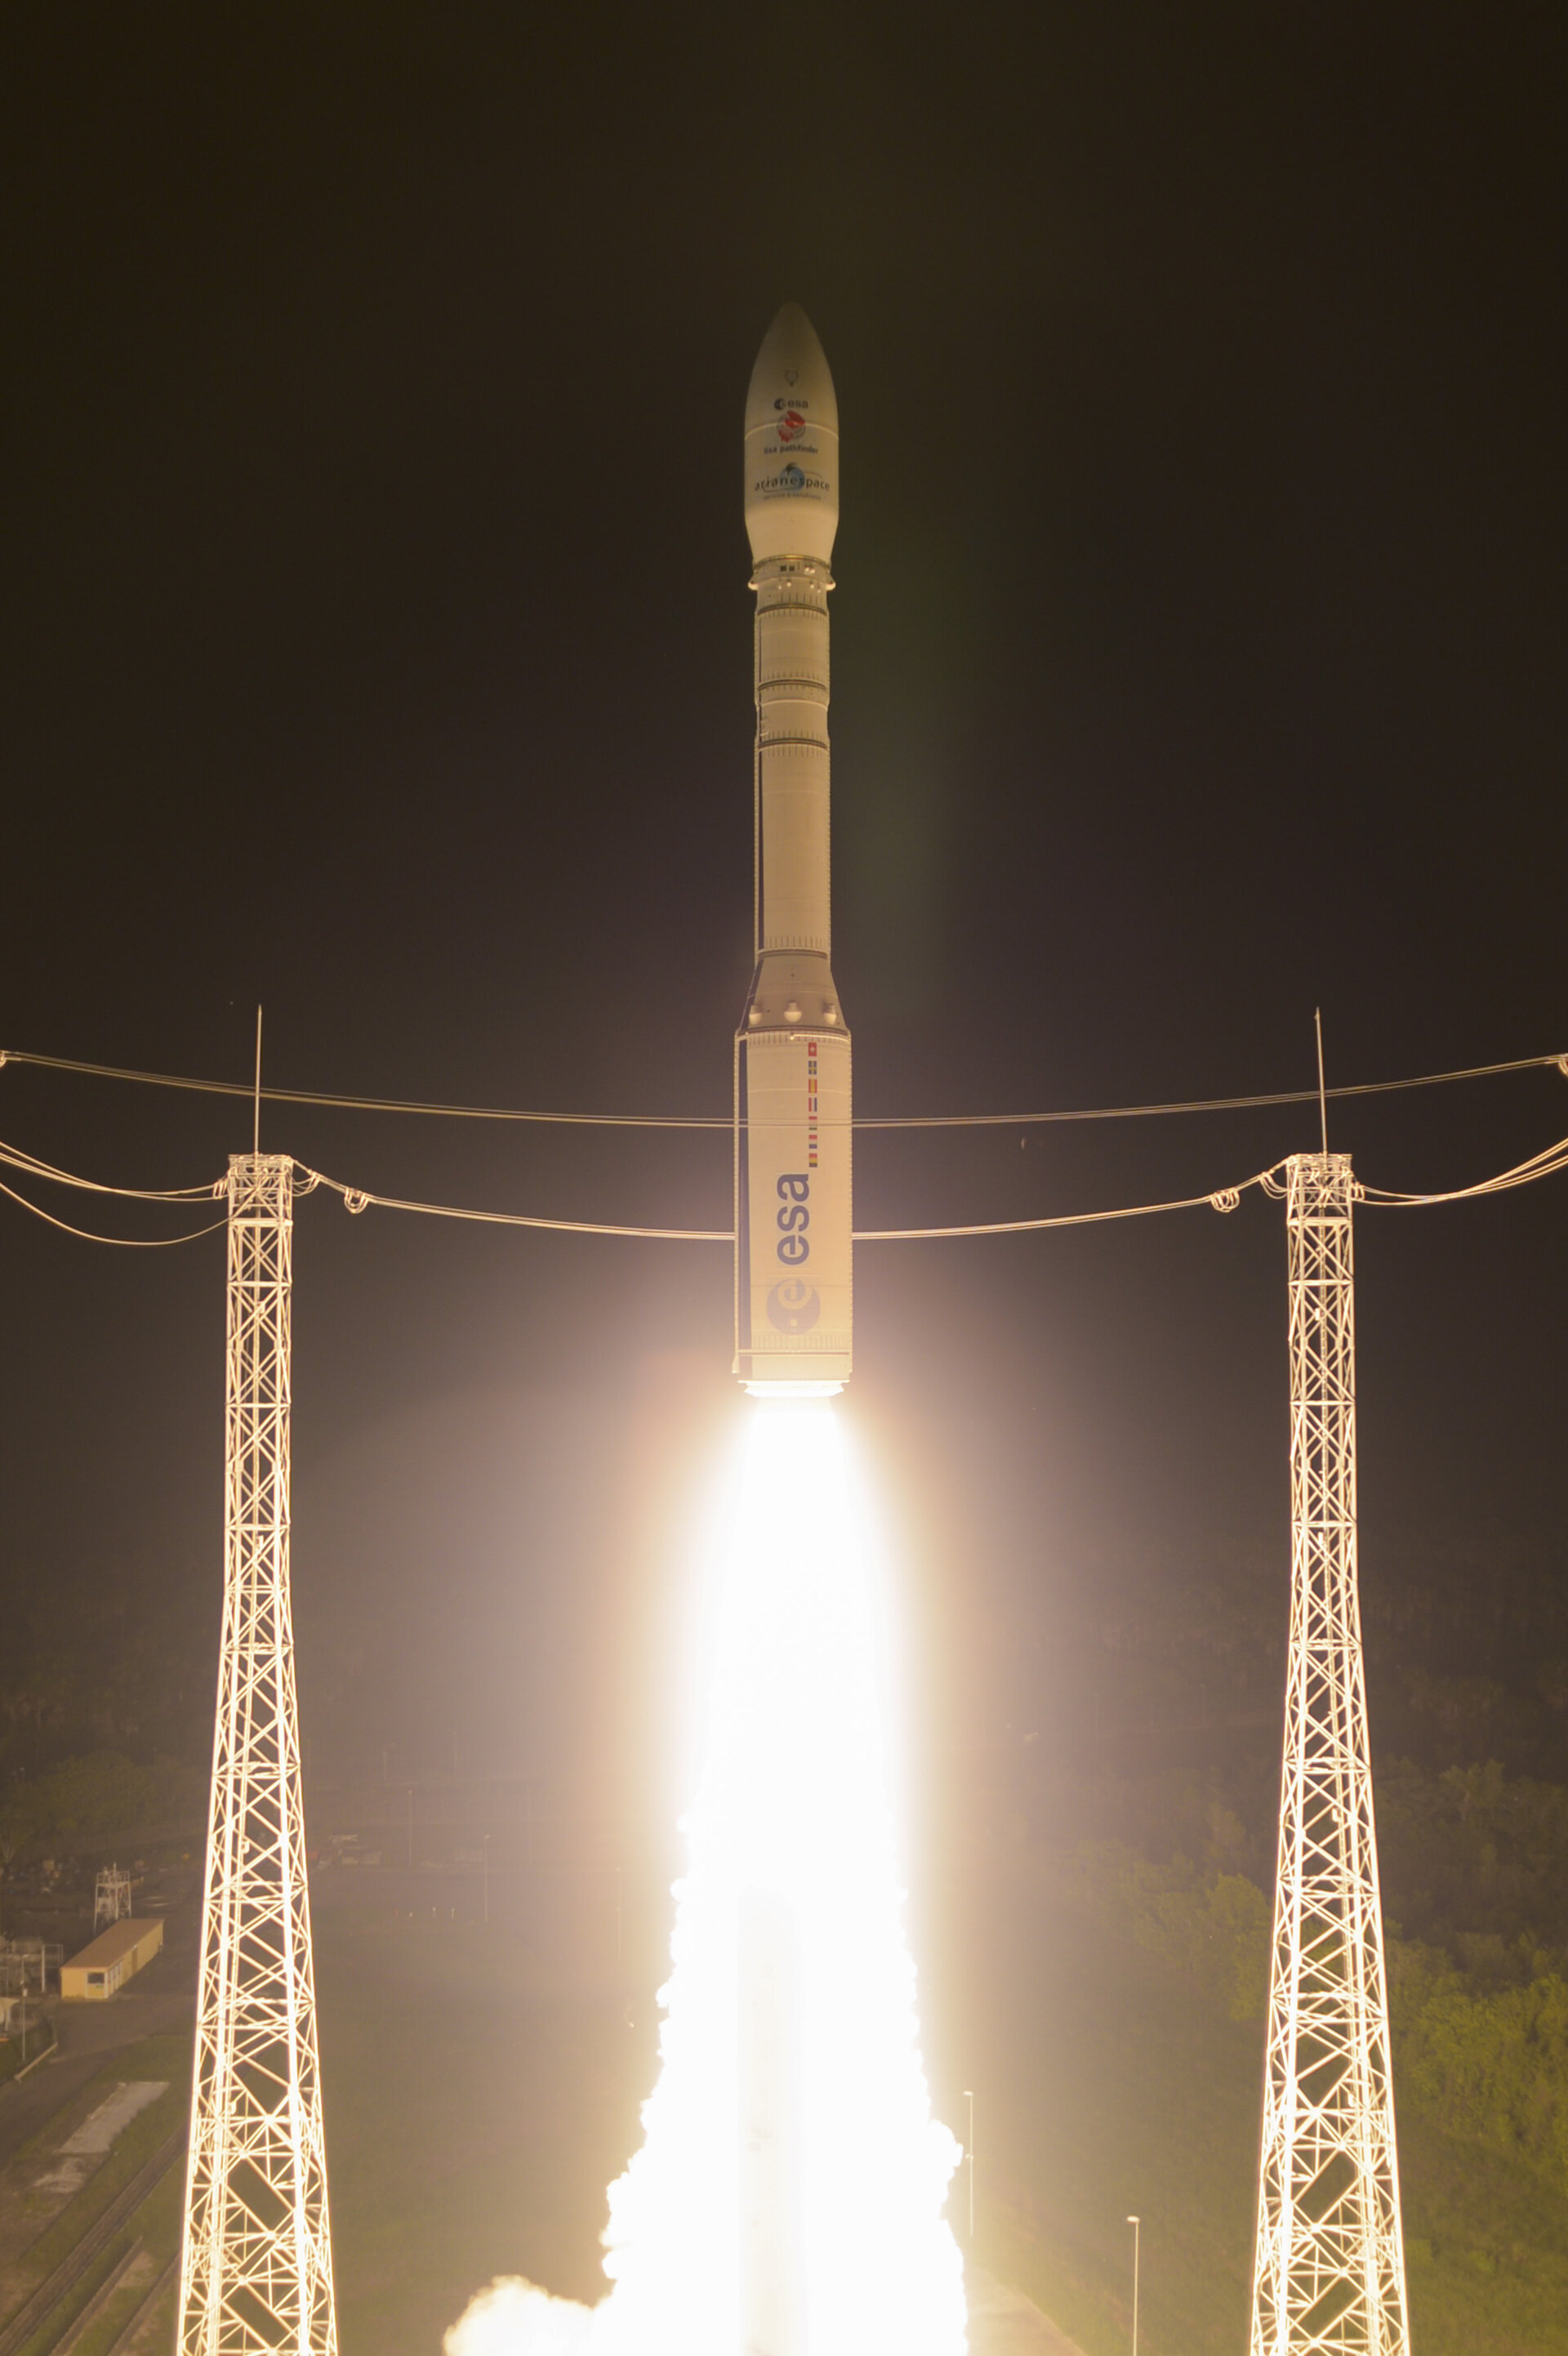 Liftoff of Vega VV06 carrying LISA Pathfinder